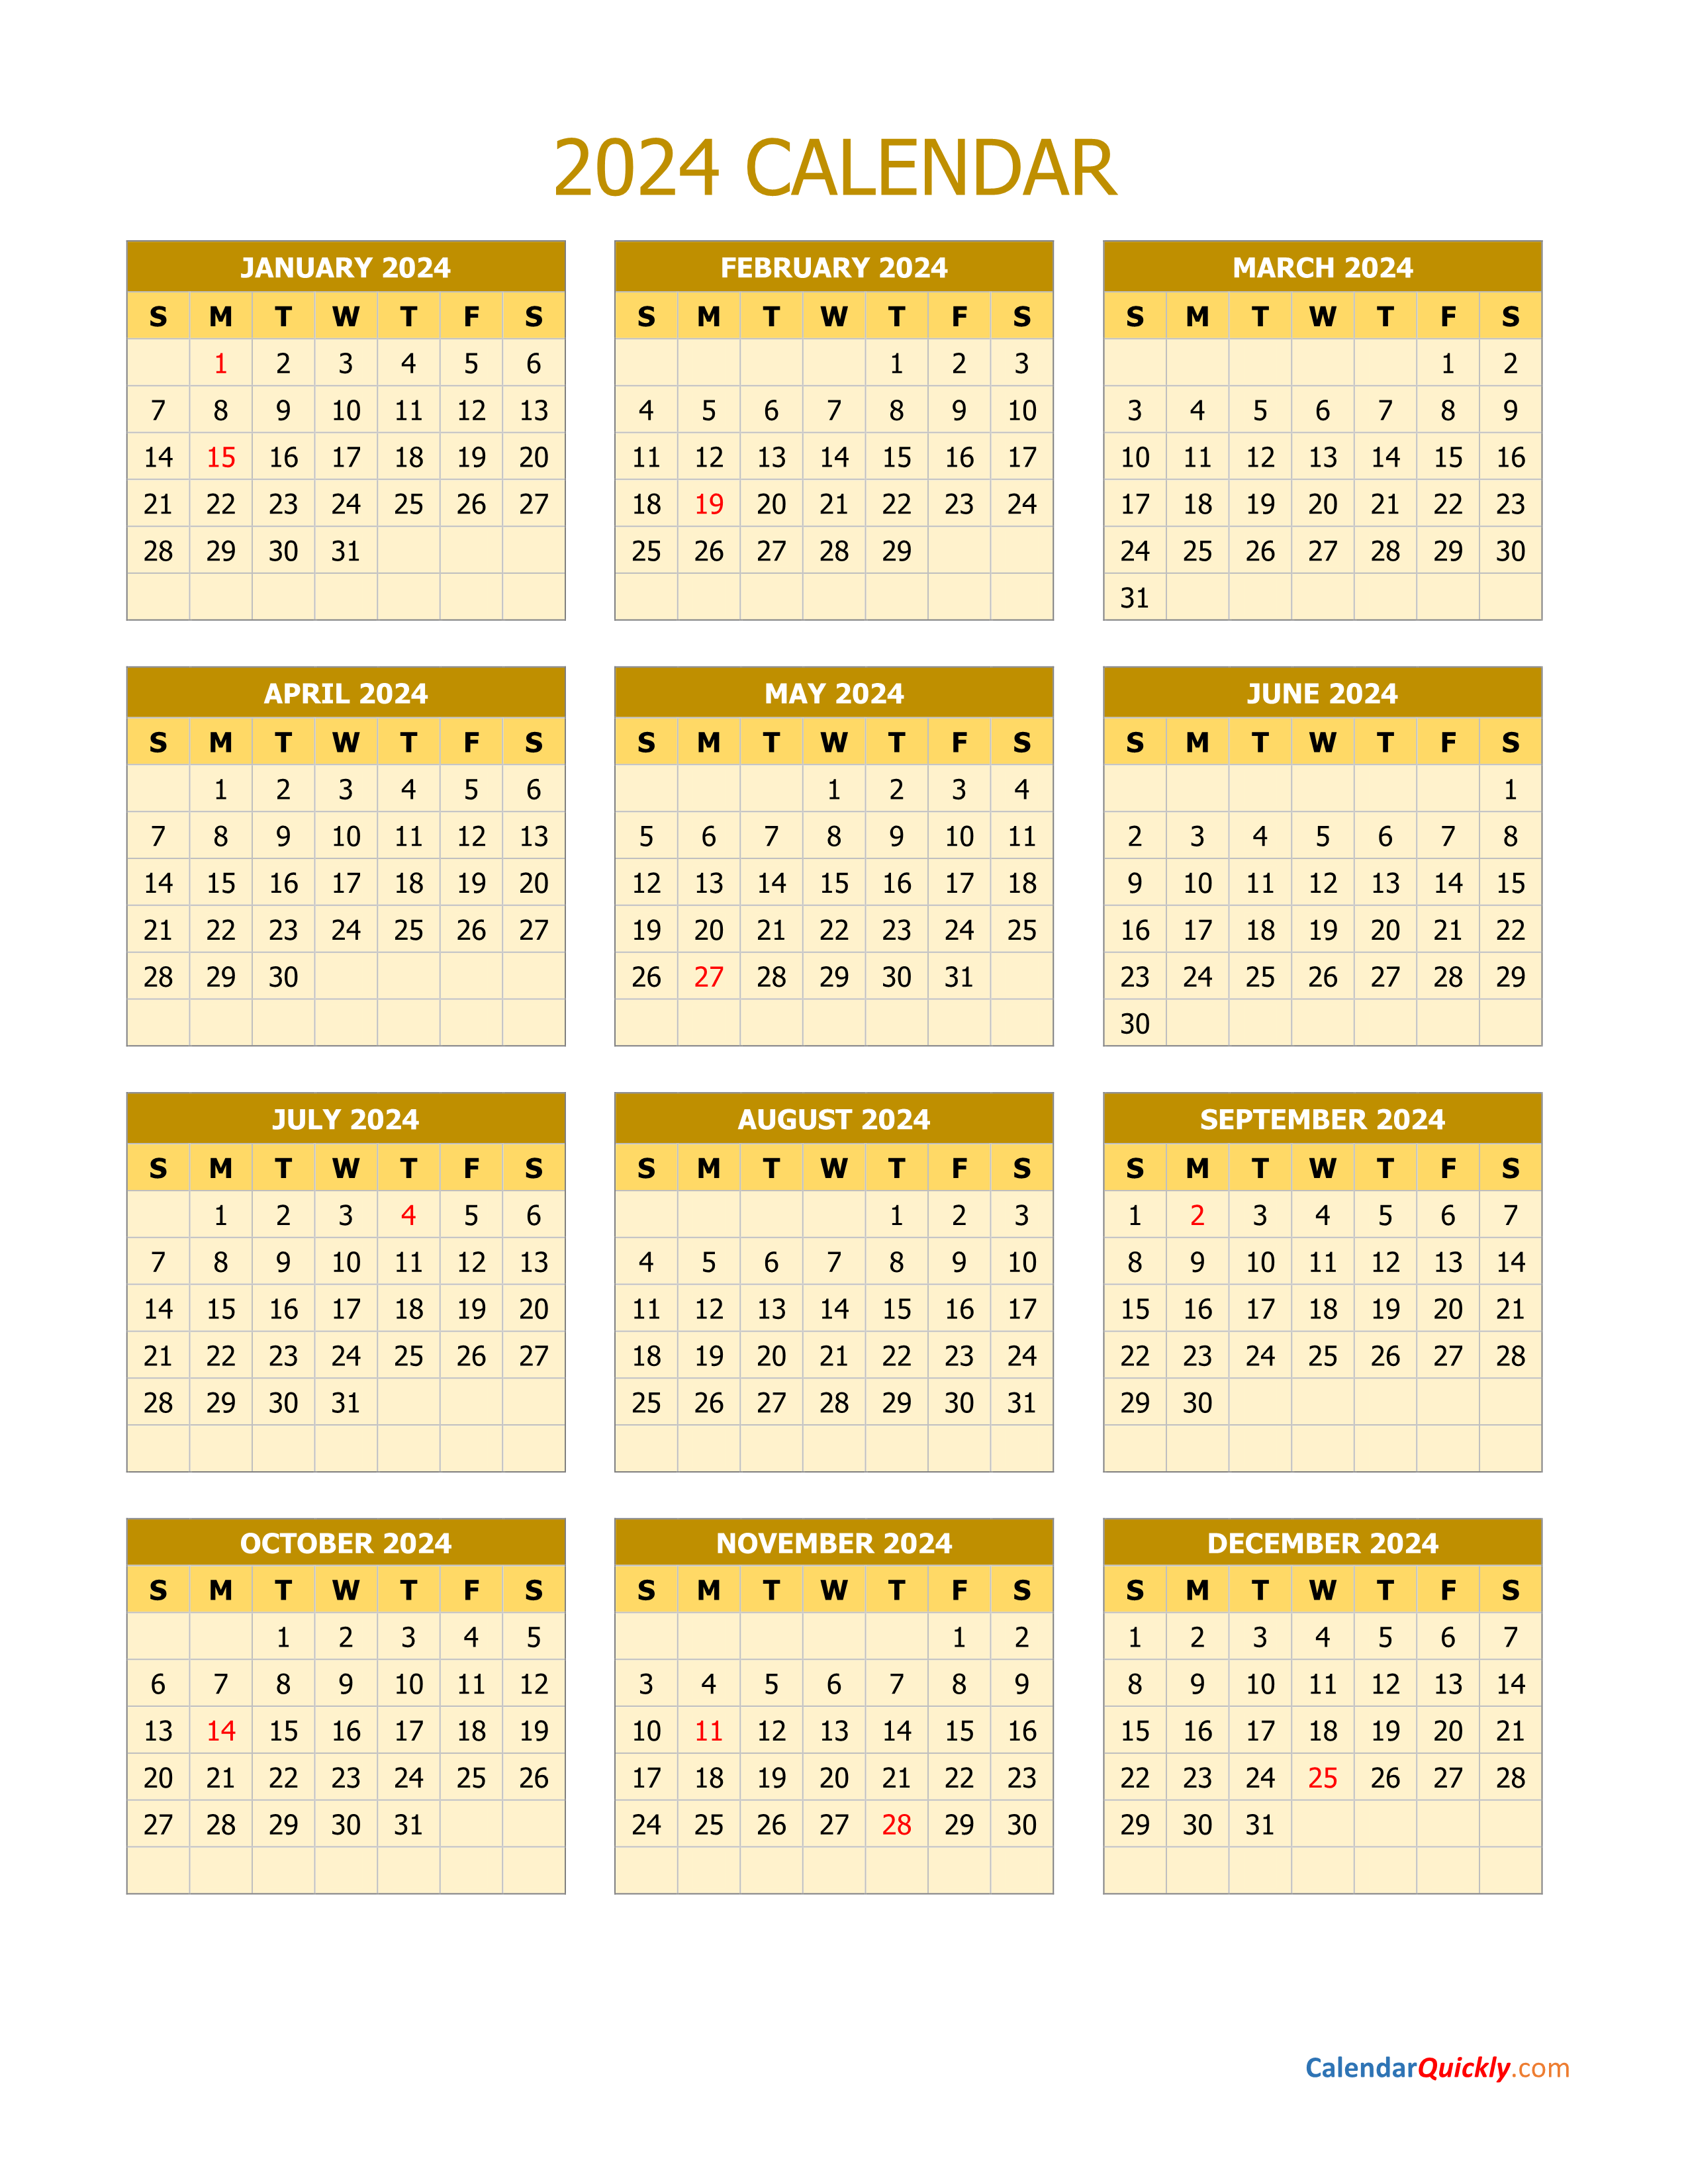 2024 Calendar Vertical Calendar Quickly - Free Printable 2024 Desk Calendar Cards